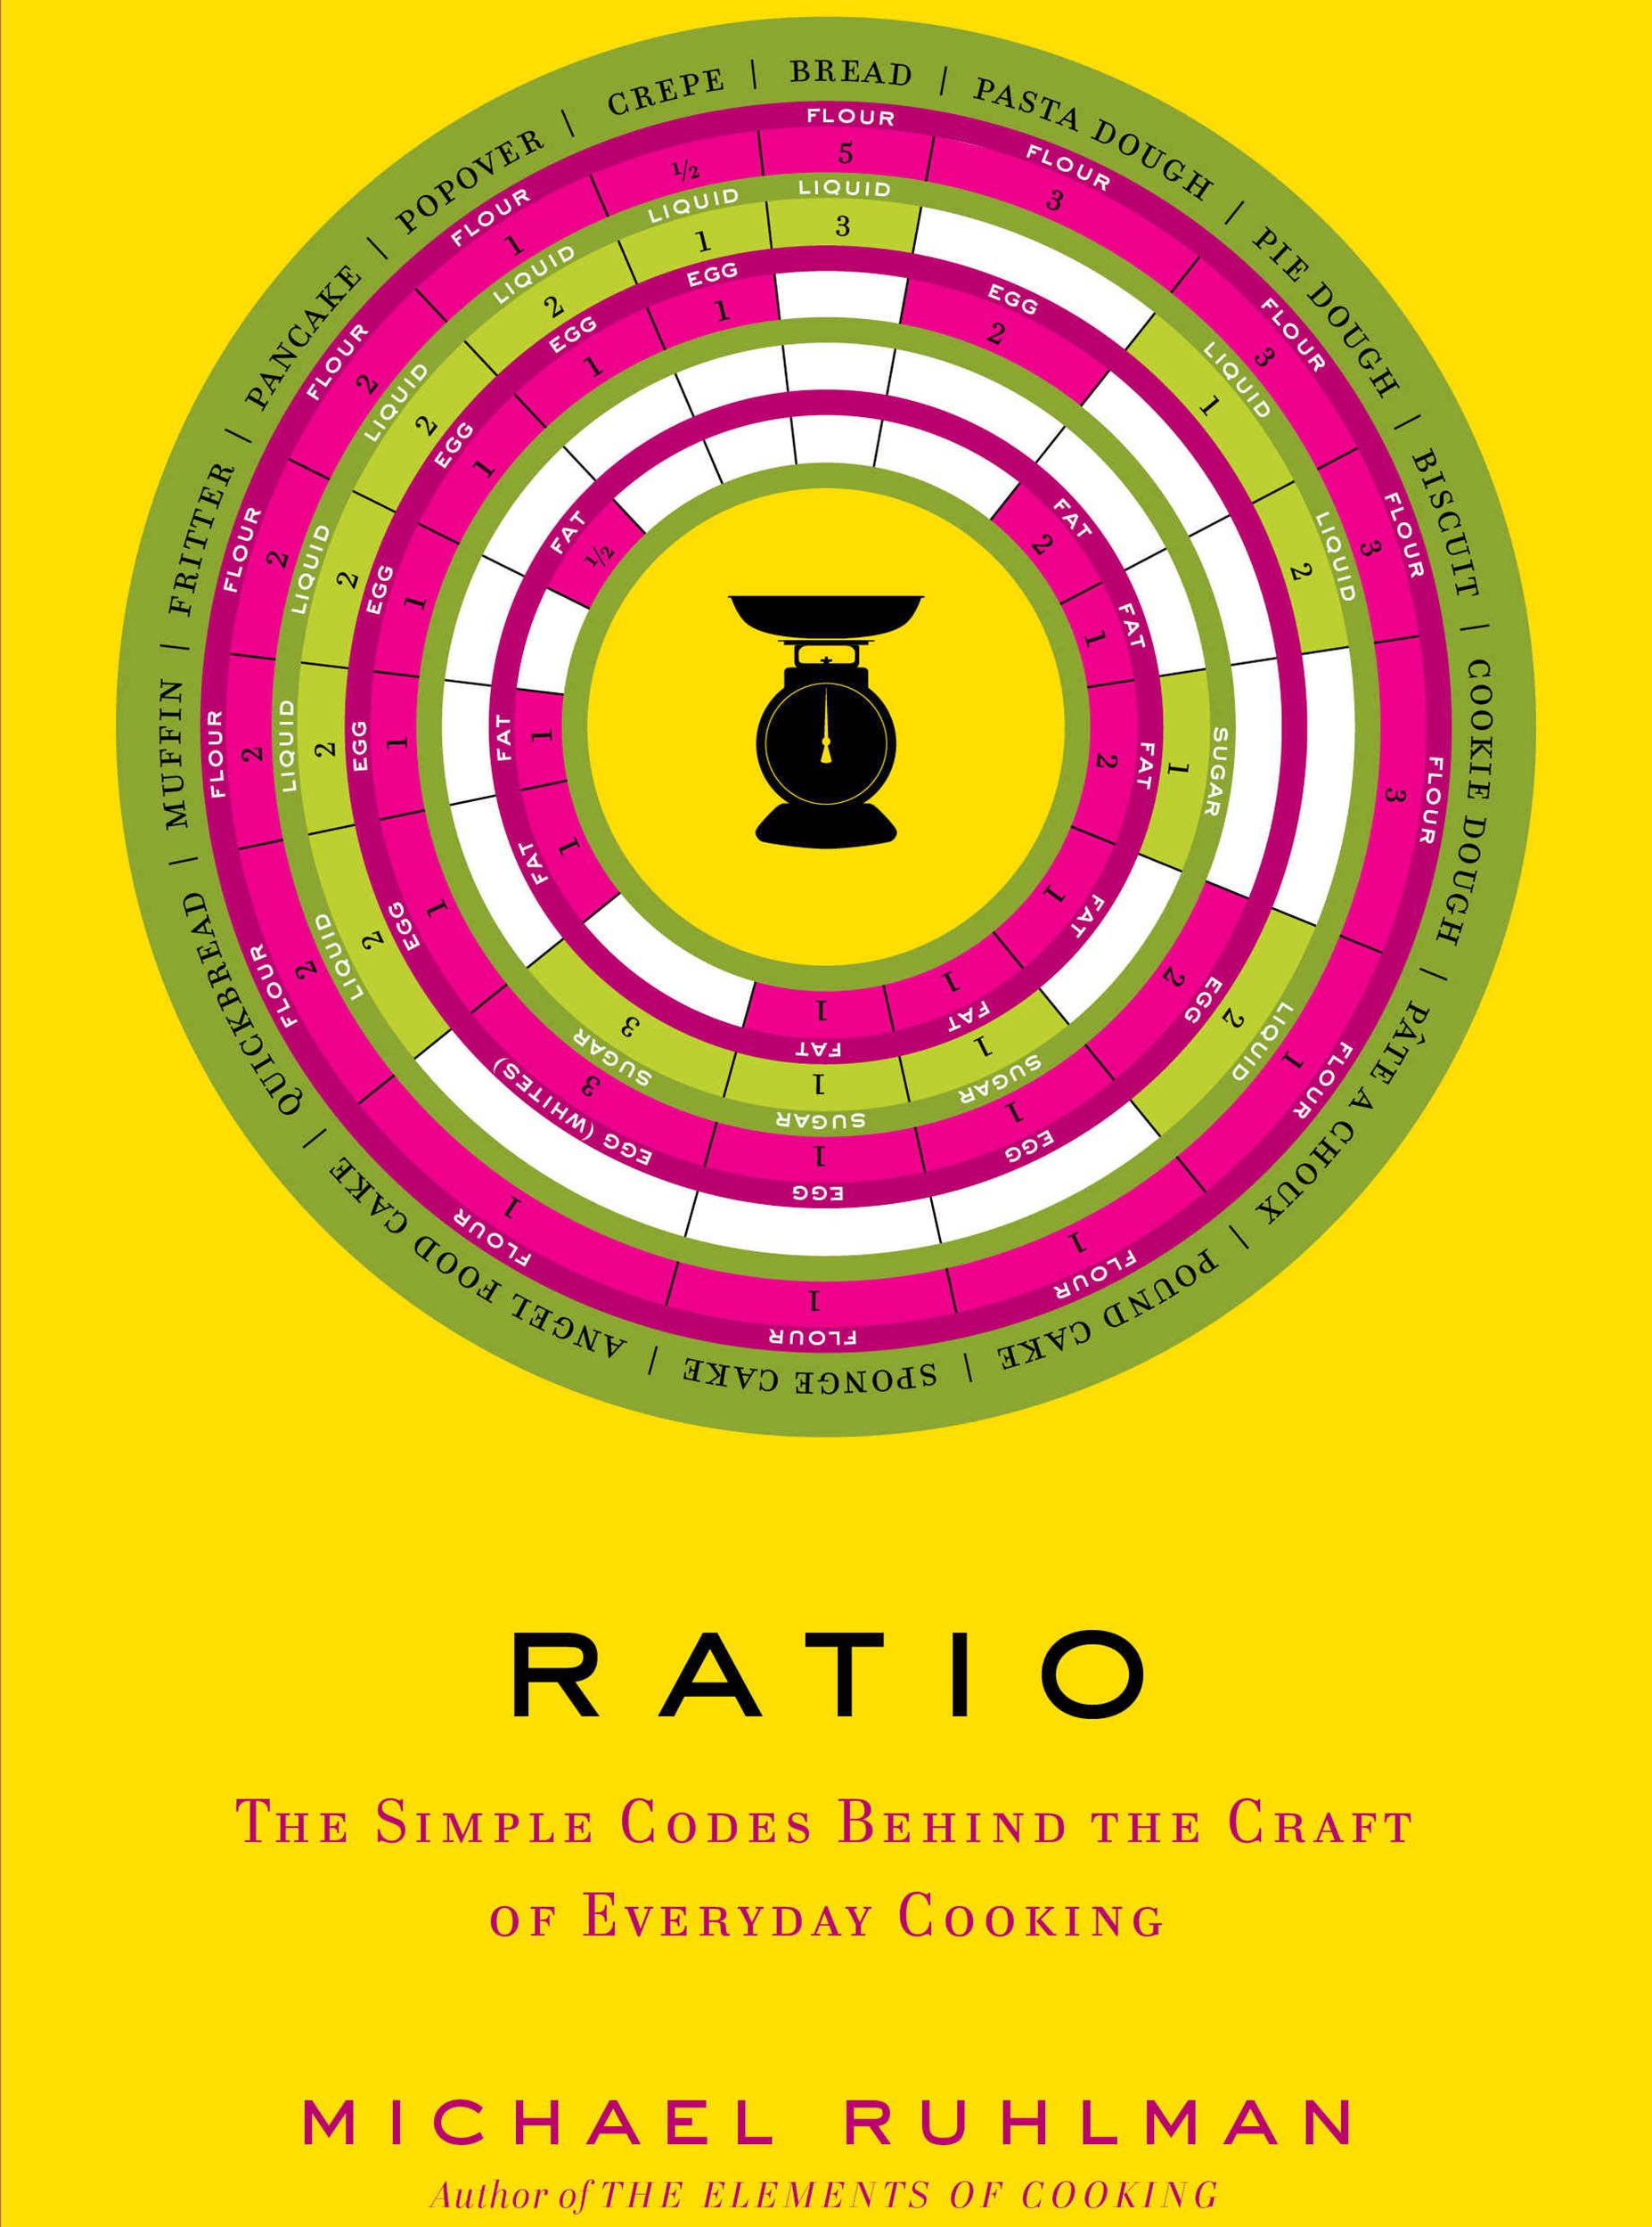 Ratio by Michael Ruhlman